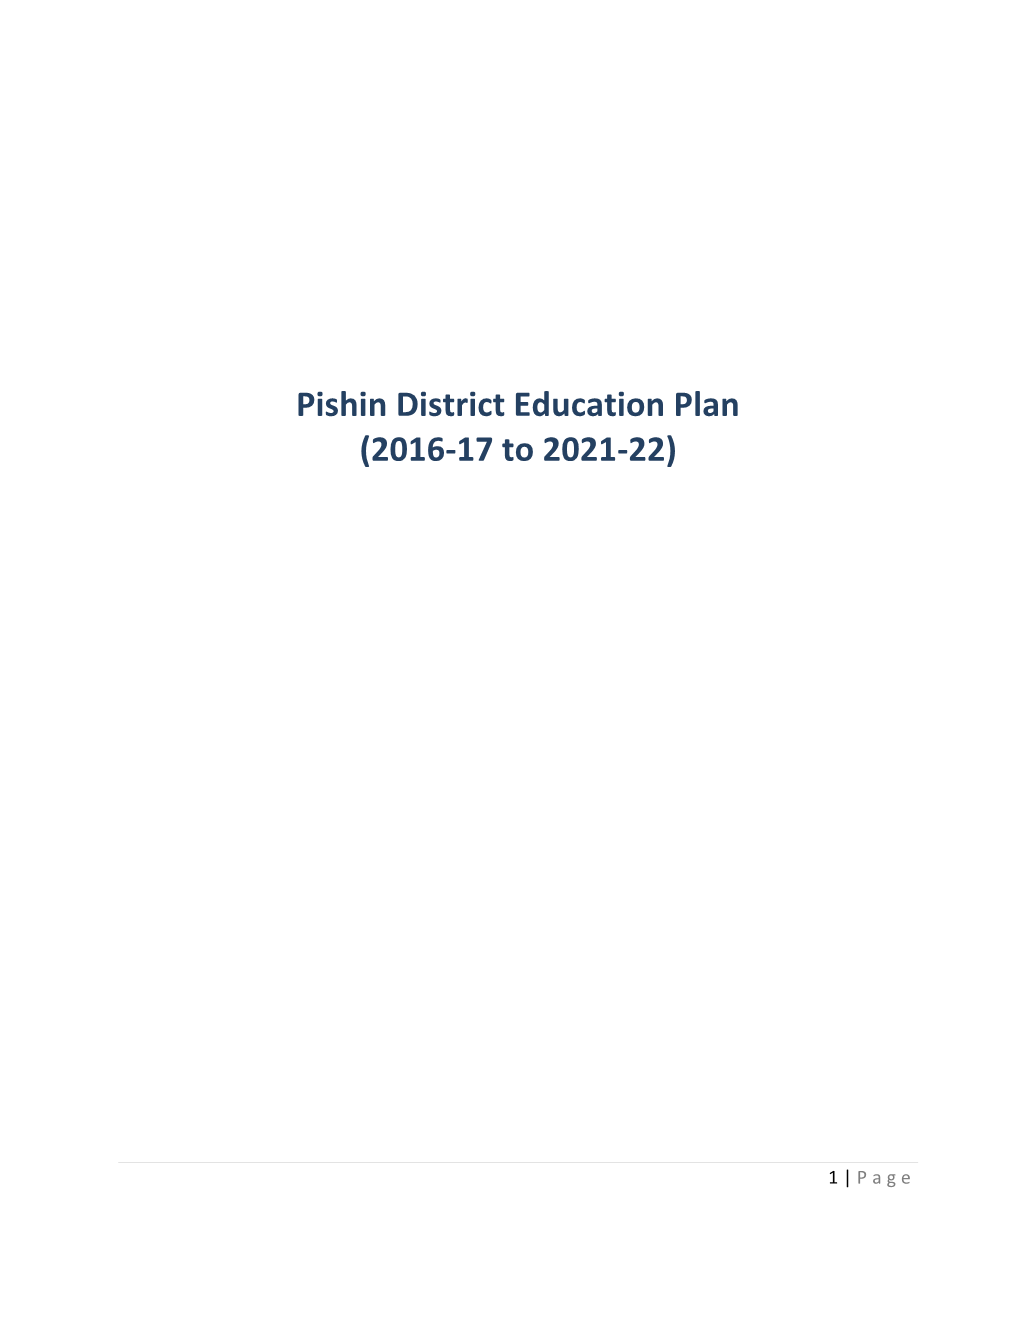 Pishin District Education Plan (2016-17 to 2021-22)